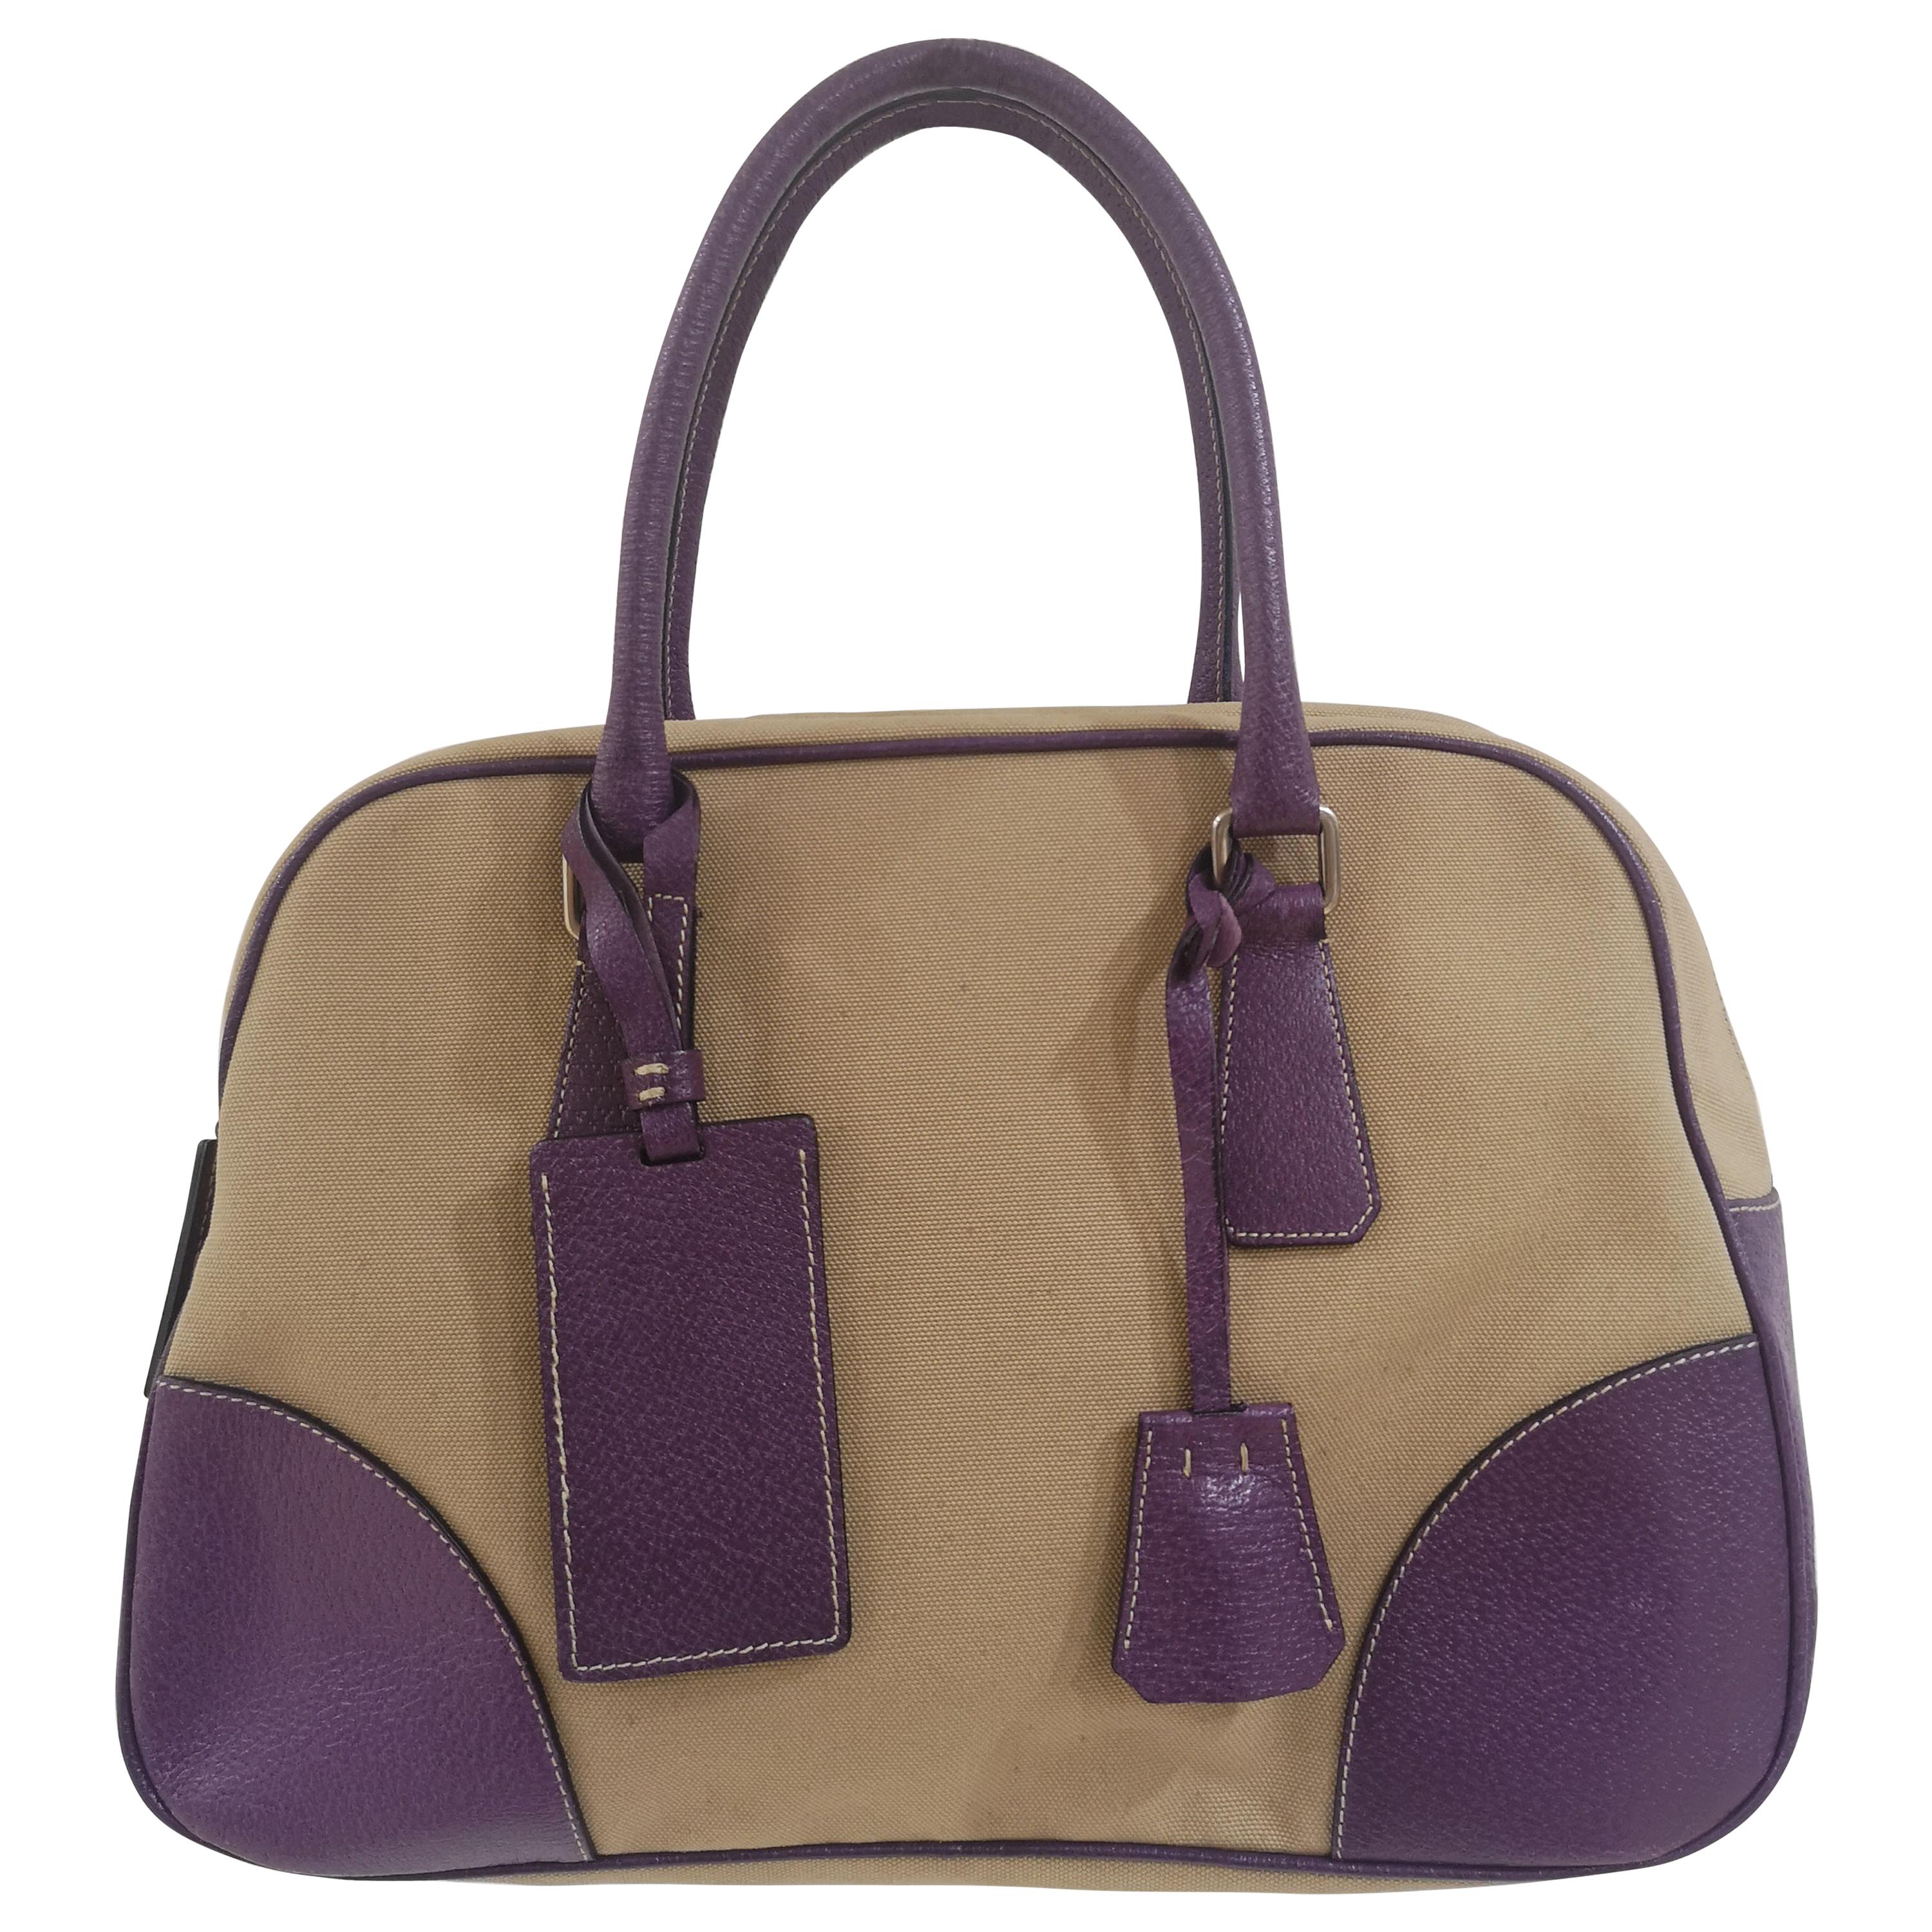 Prada beige purple handle bag / Shoulder bag